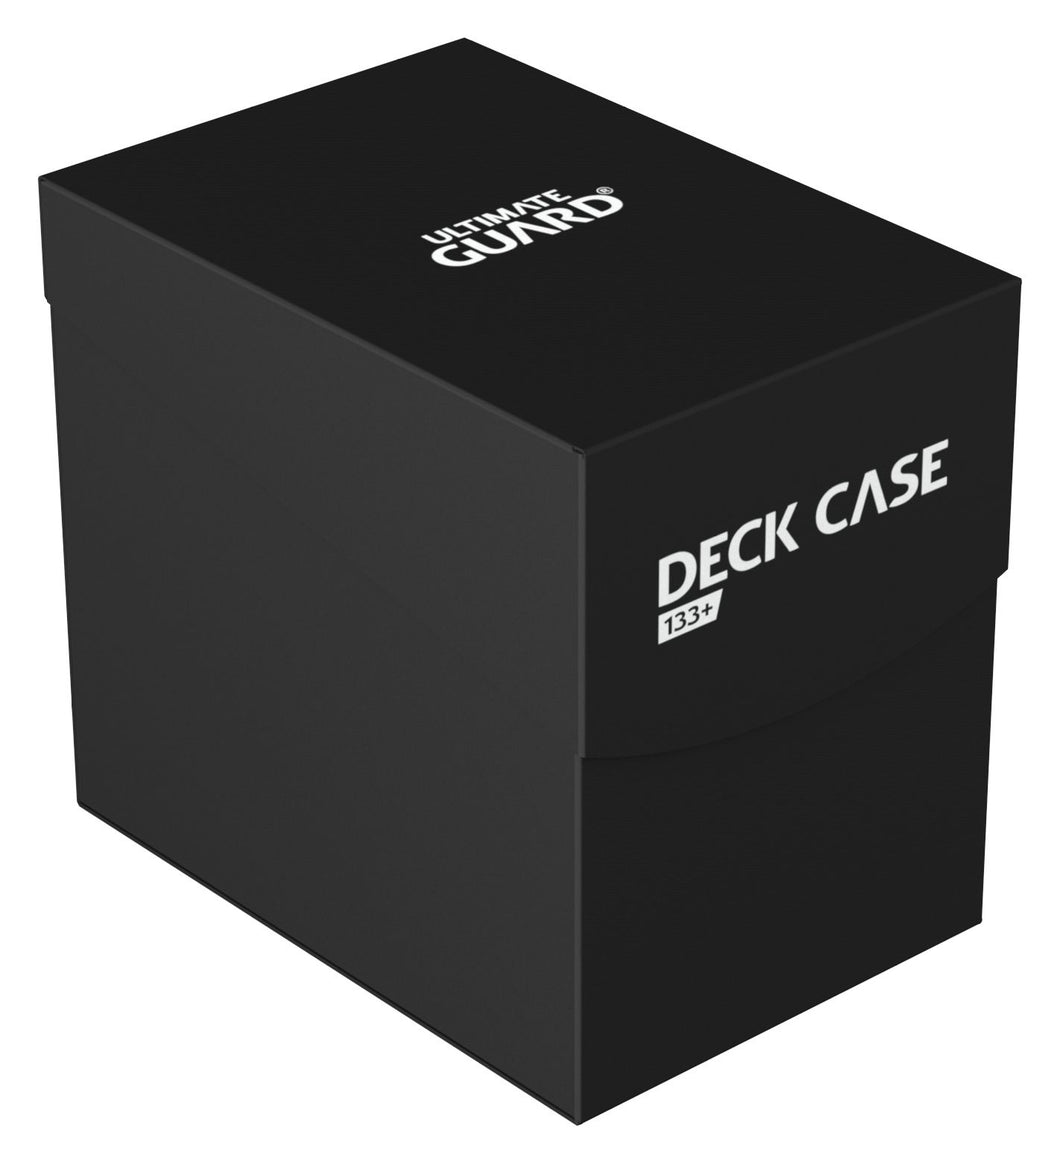 Ultimate Guard Deck Case 133+ (Black)